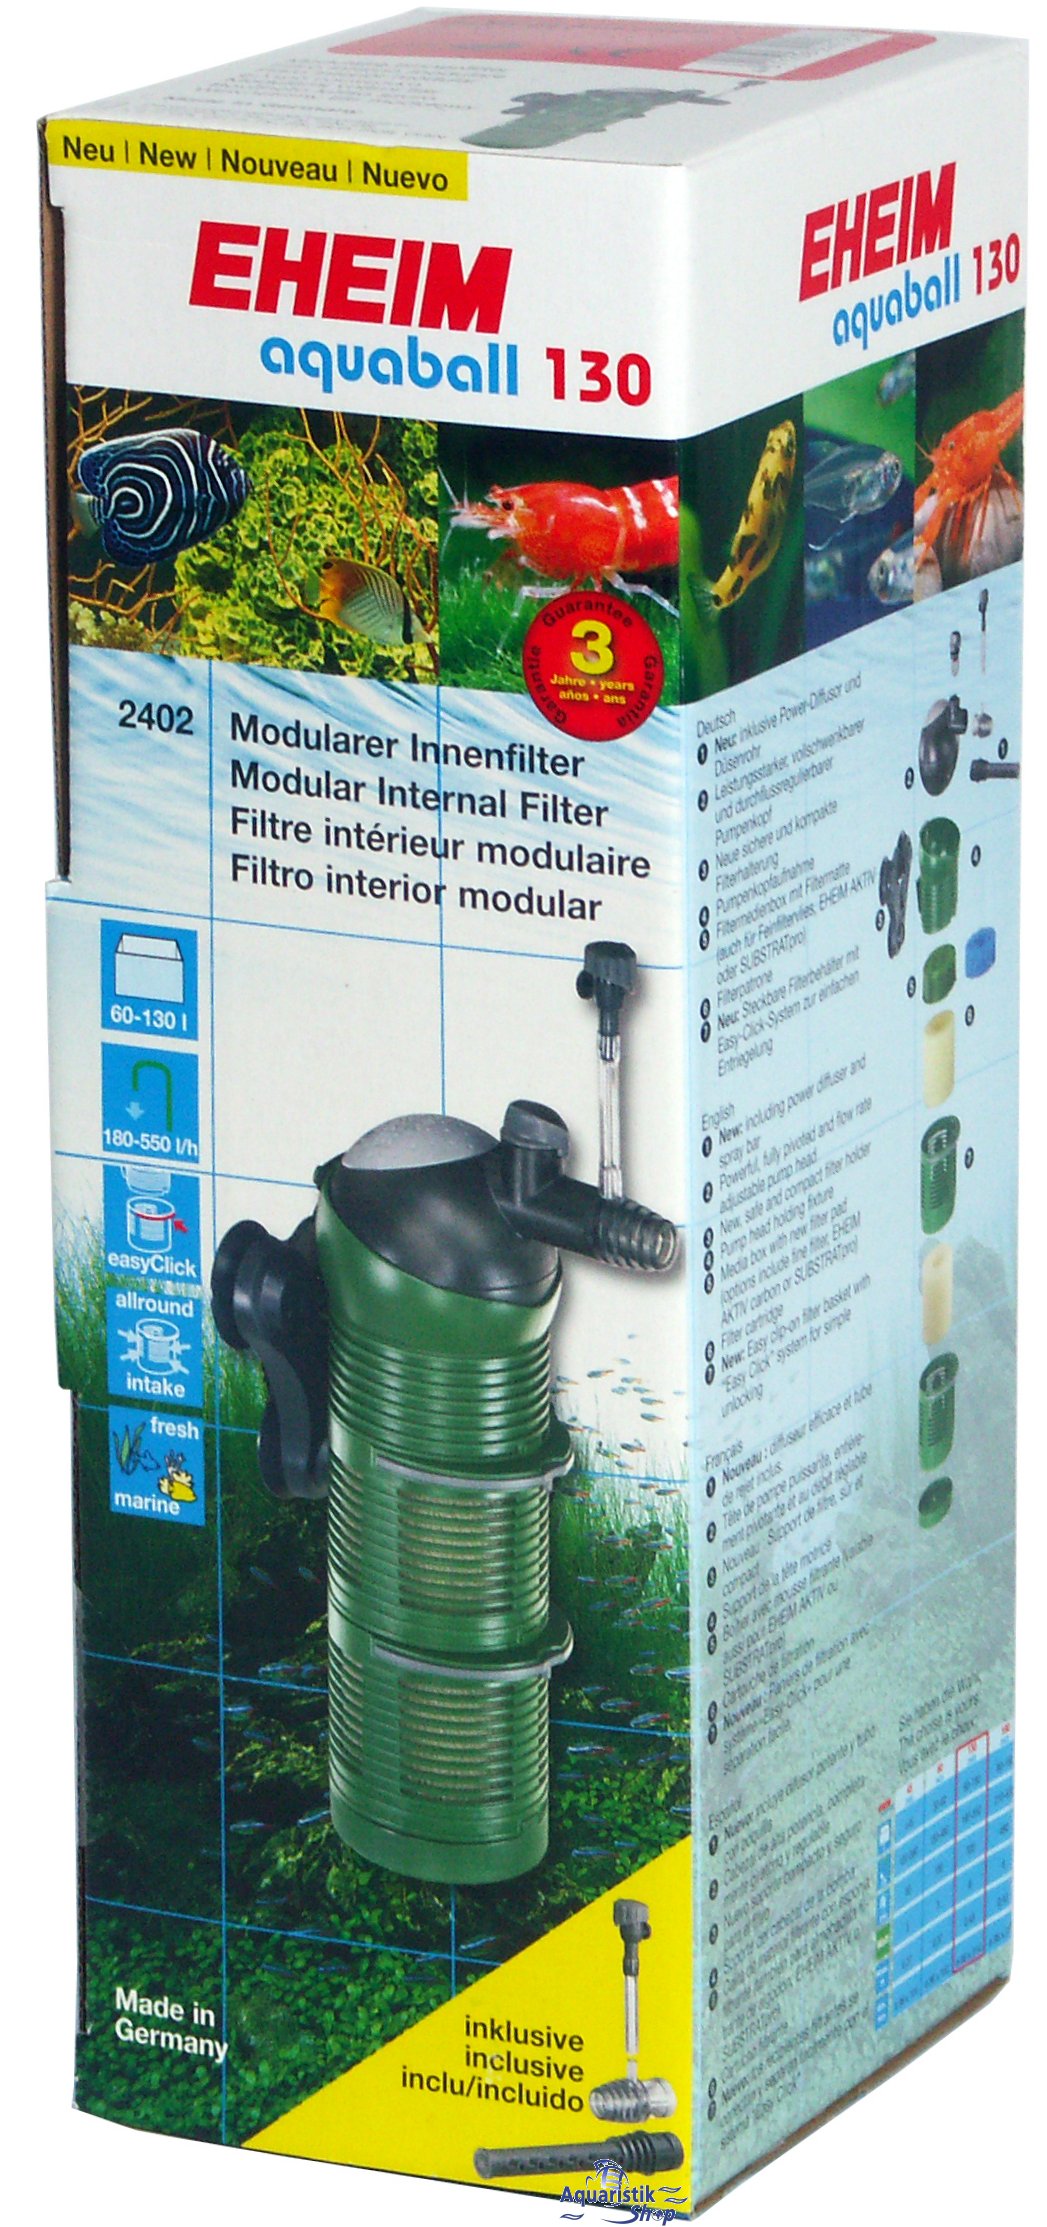 Internal Filter Aquaball-(New) With Spray Bar at Rs 3080